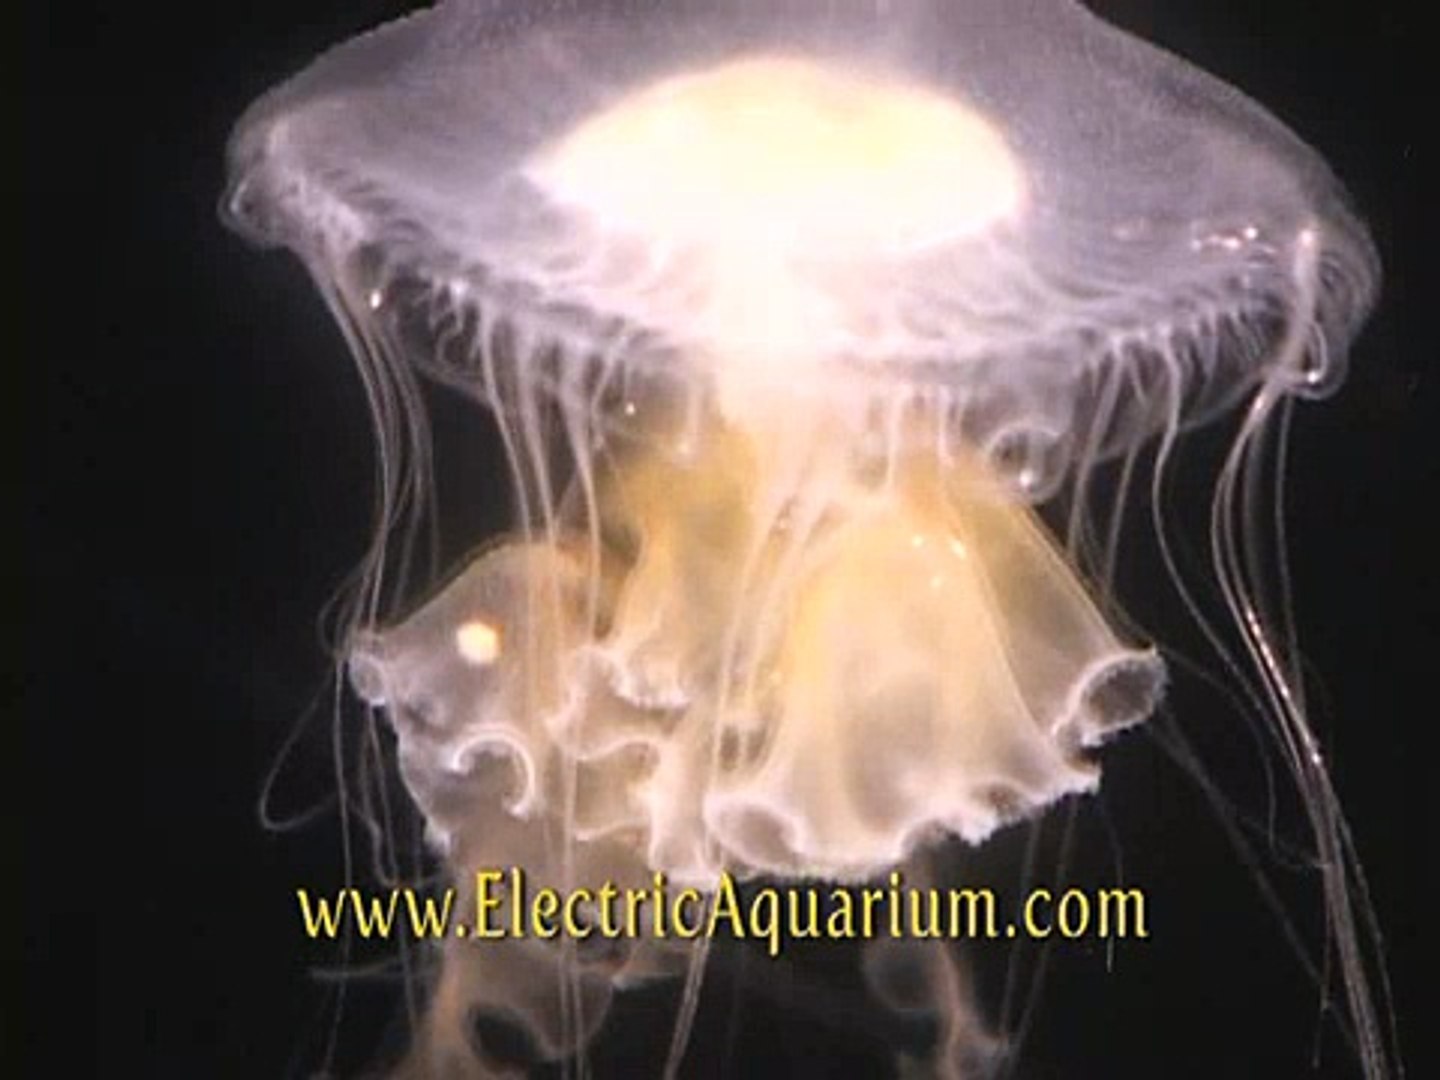 Jellyfish #1